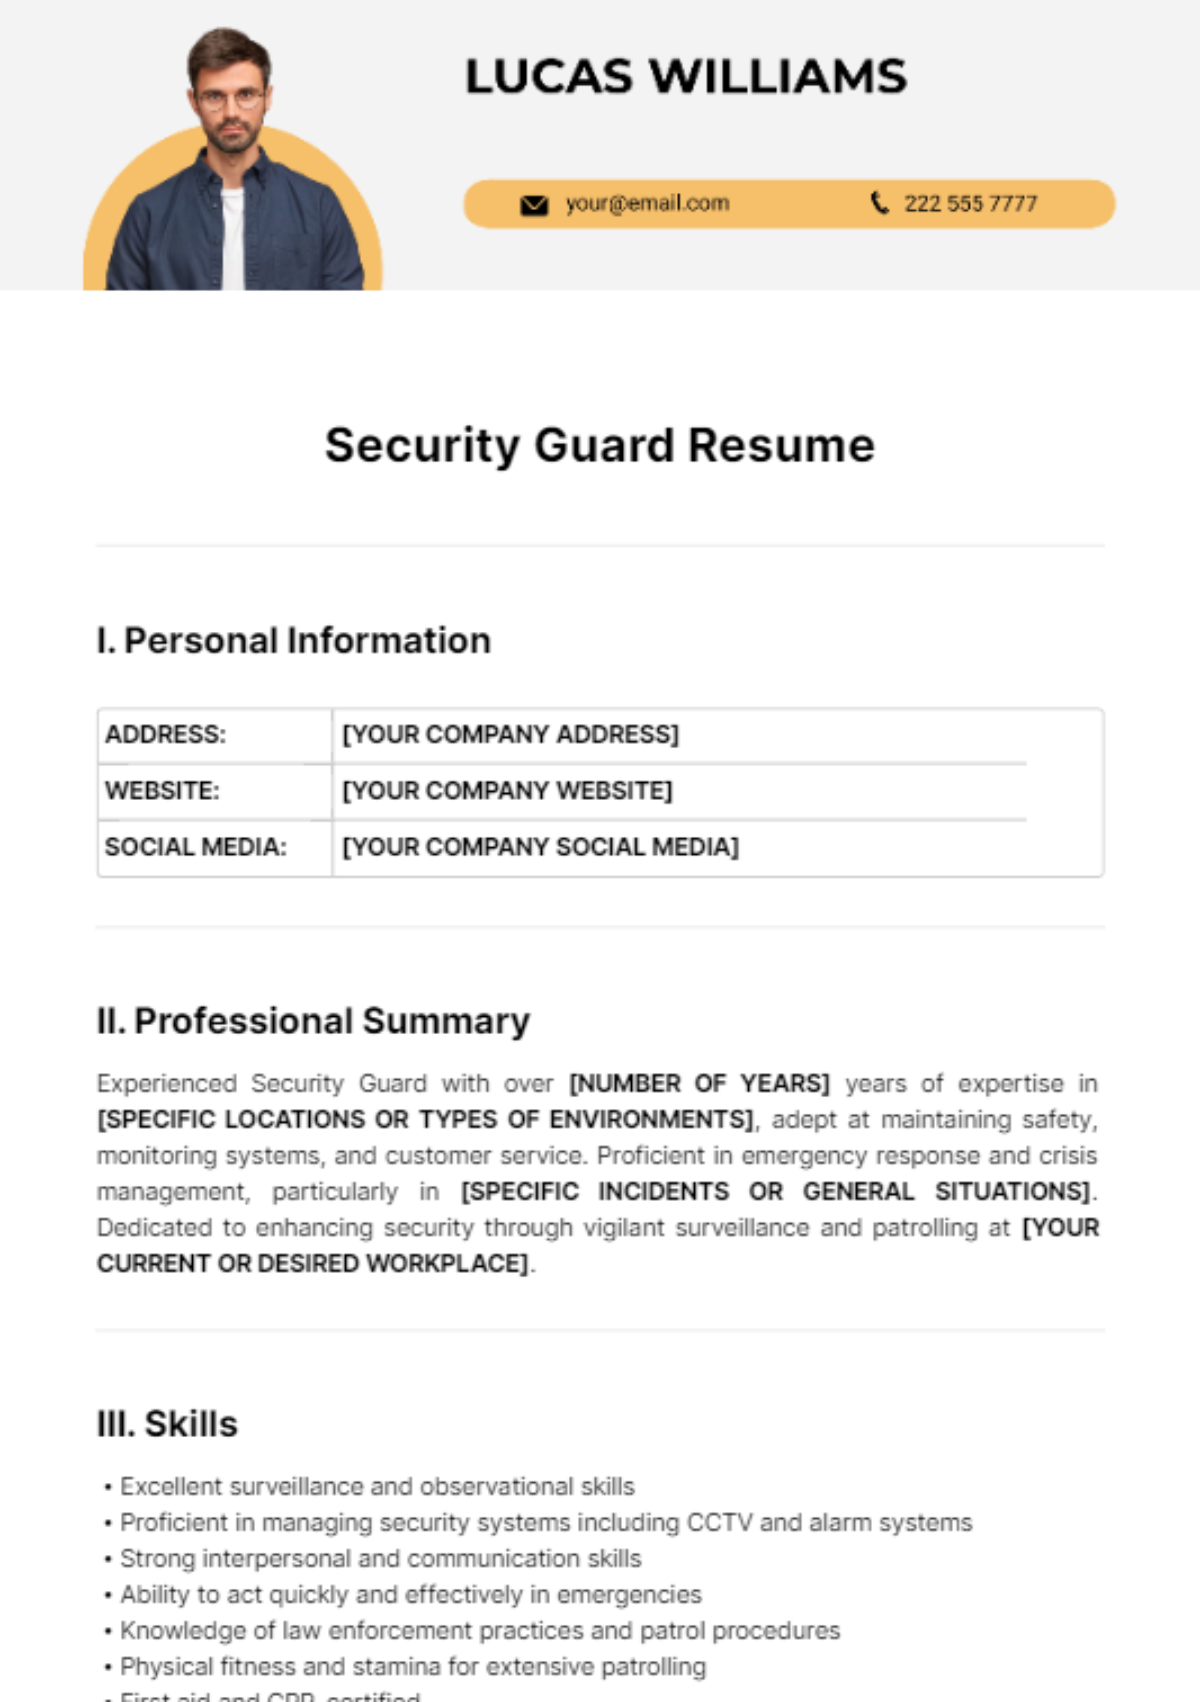 Security Guard Resume Template